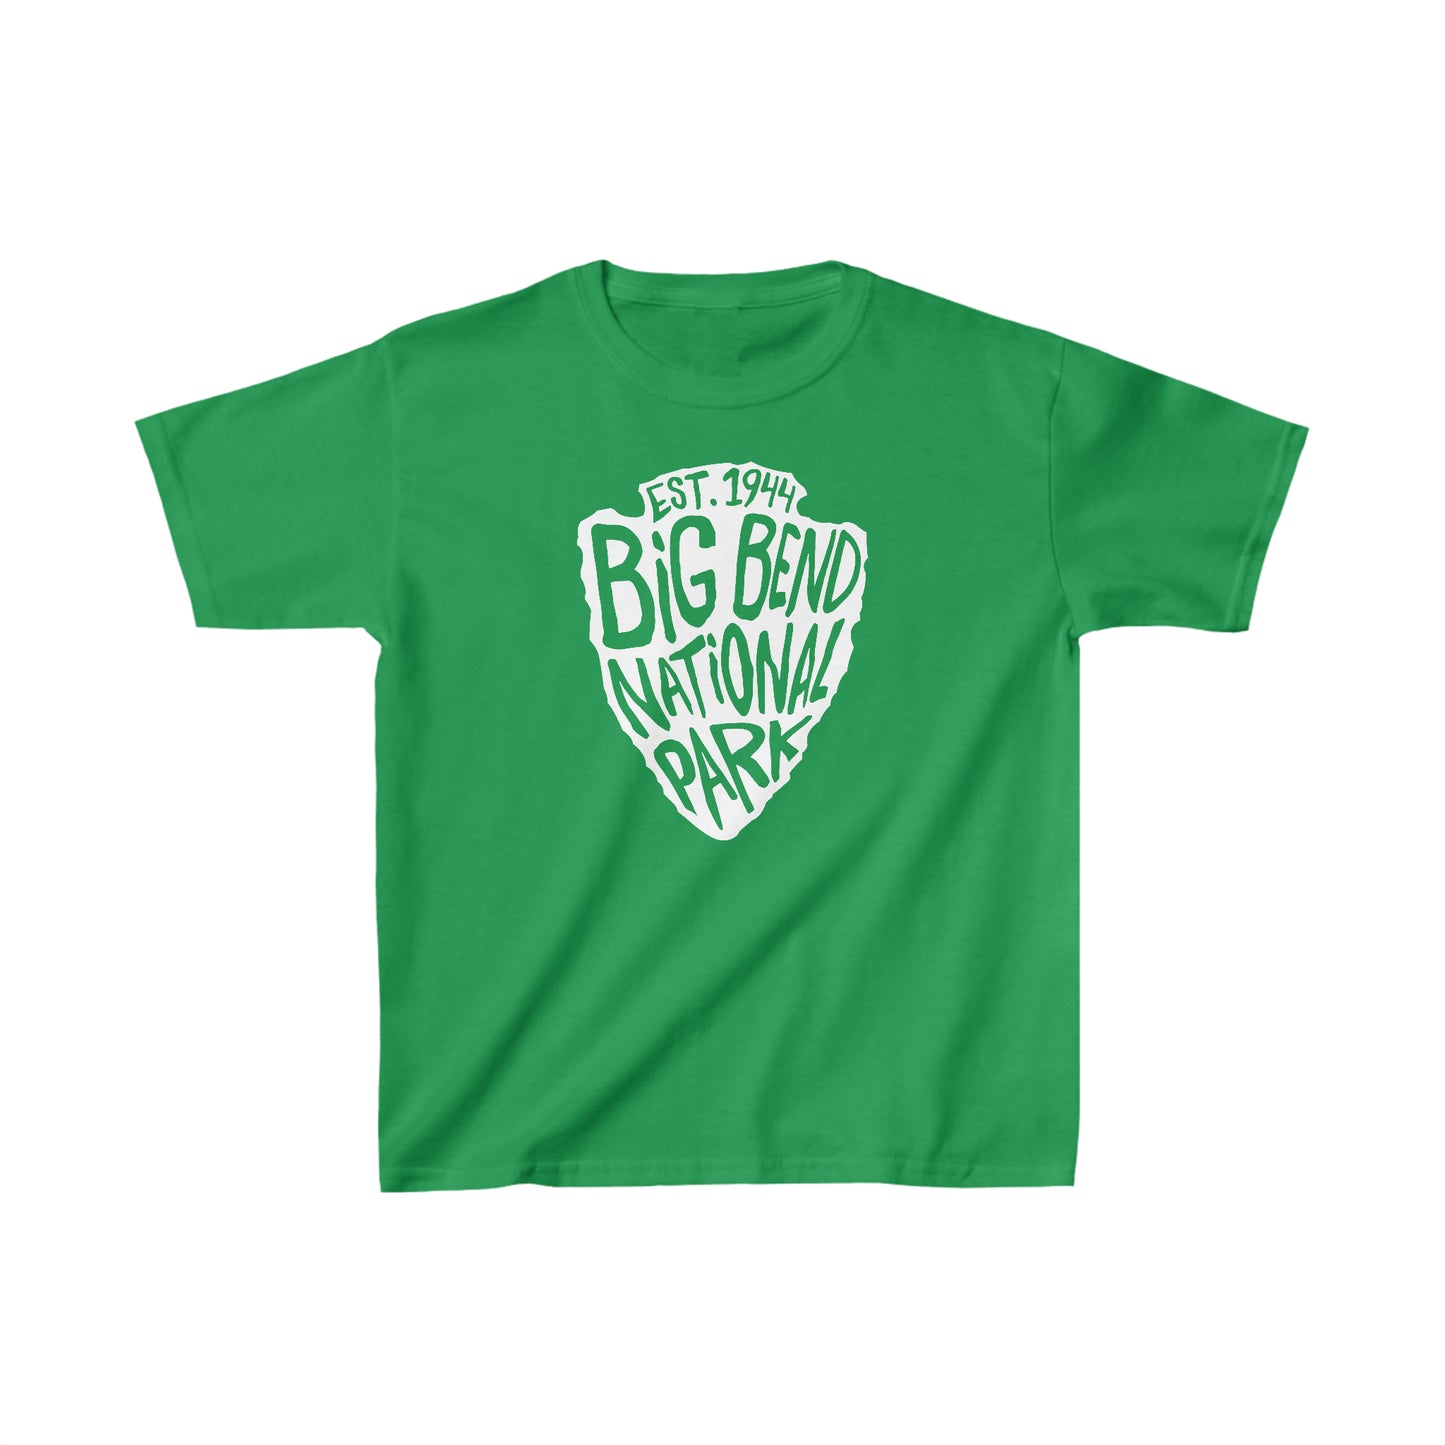 Big Bend National Park Child T-Shirt - Arrowhead Design